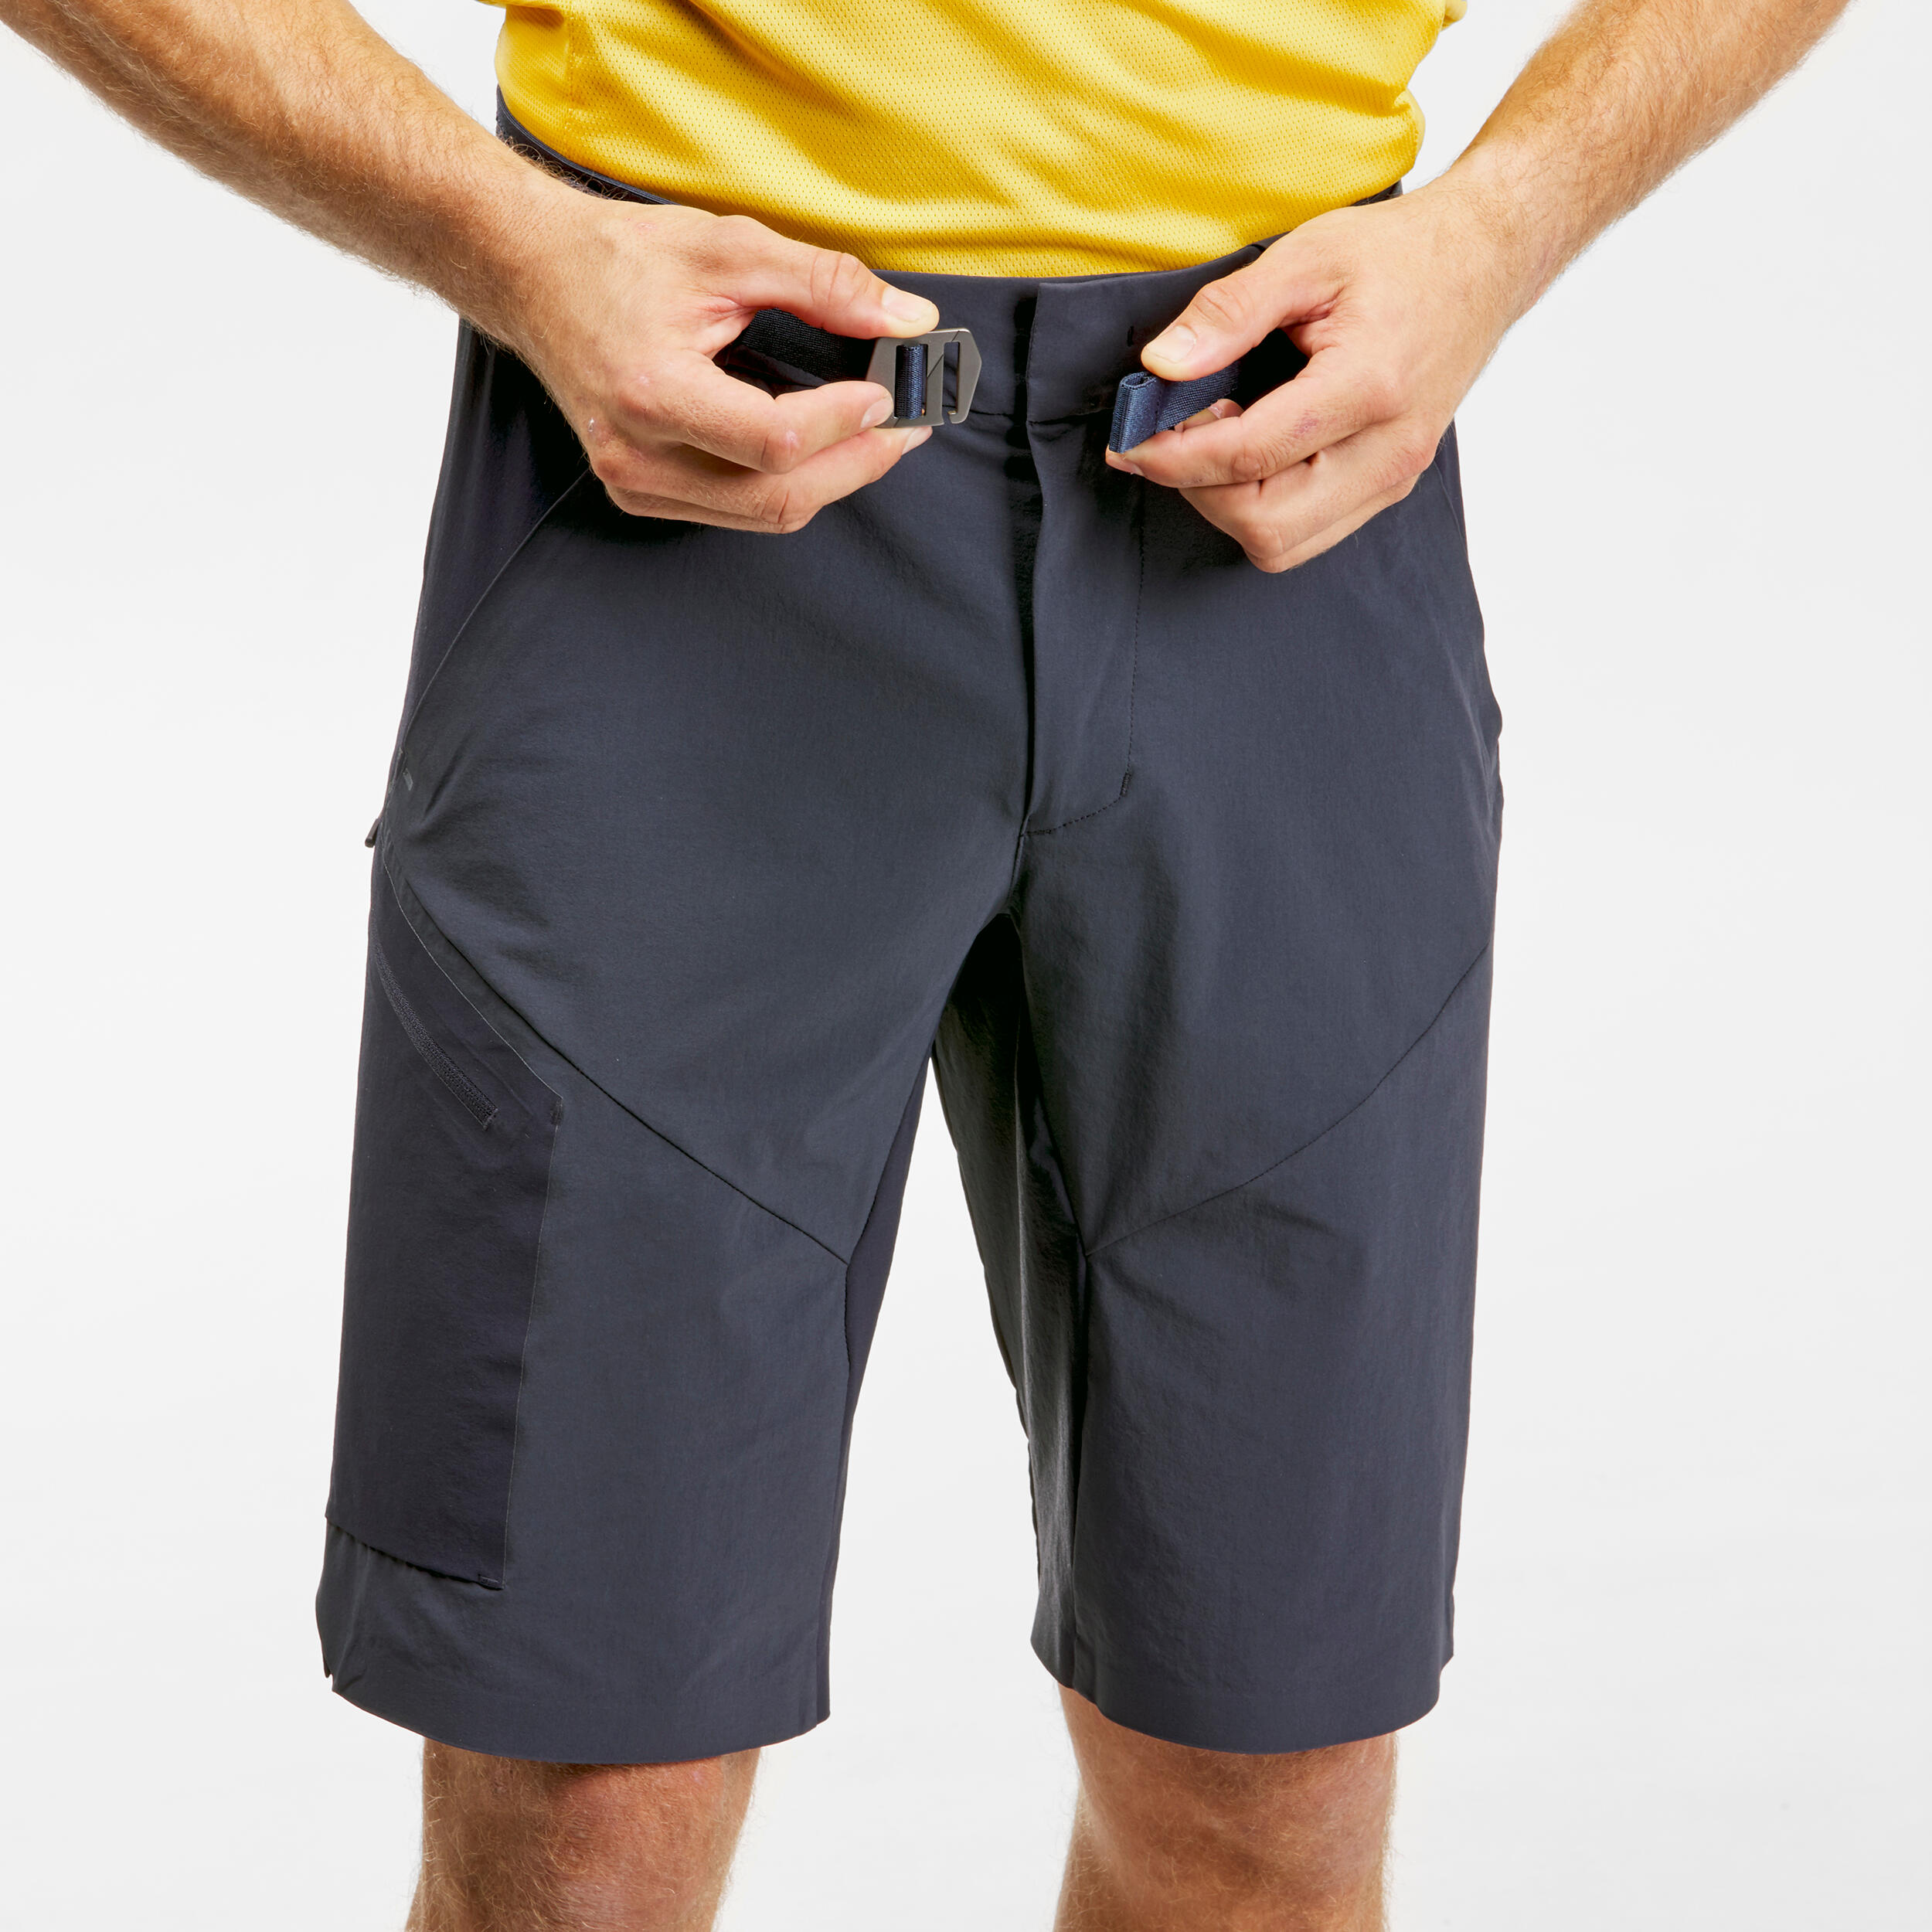 Men's Hiking Long Shorts - MH500 5/5